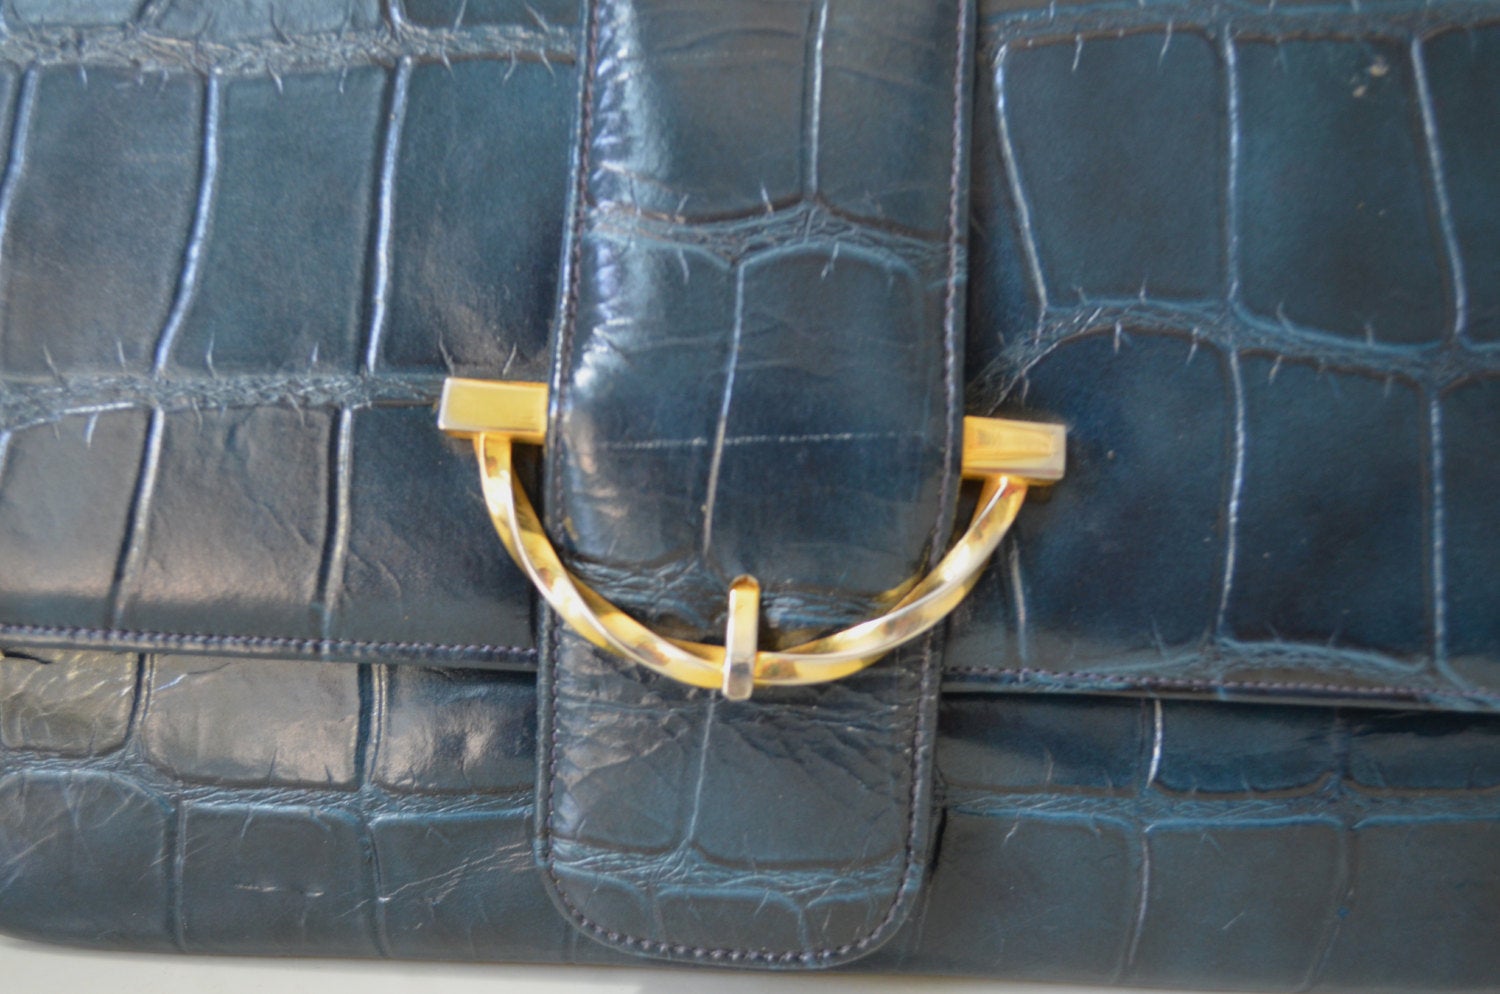 Rodart Blue Navy Leather Croco Handbag 60S Purse